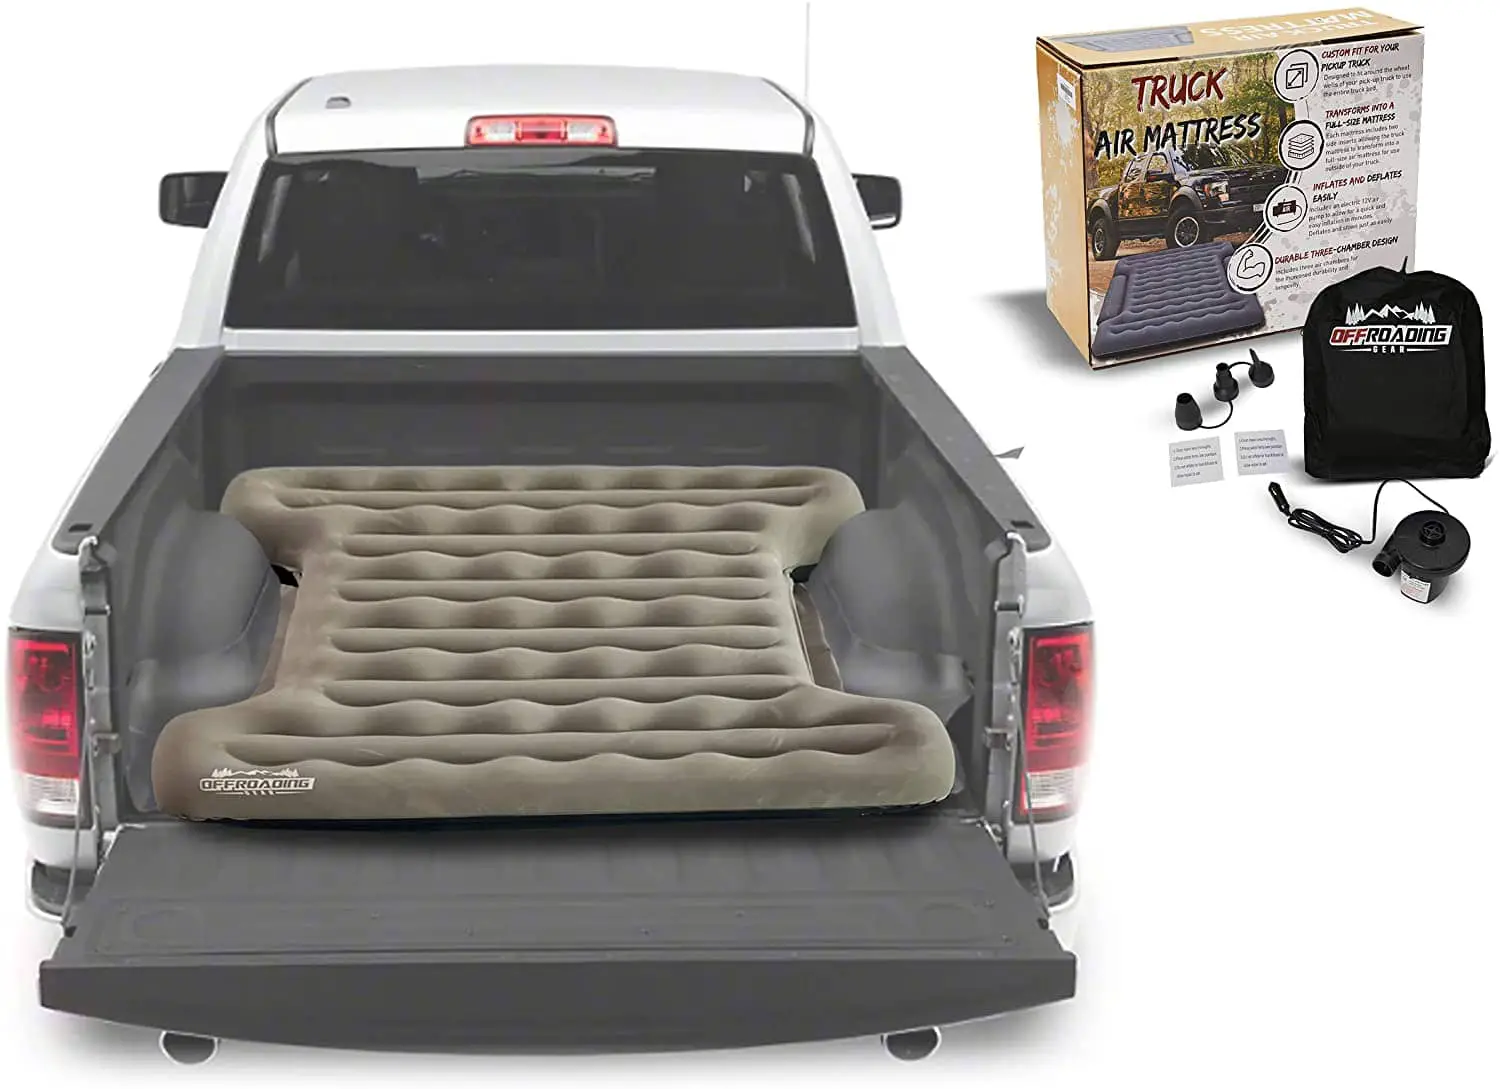 strap mattress to truck bed